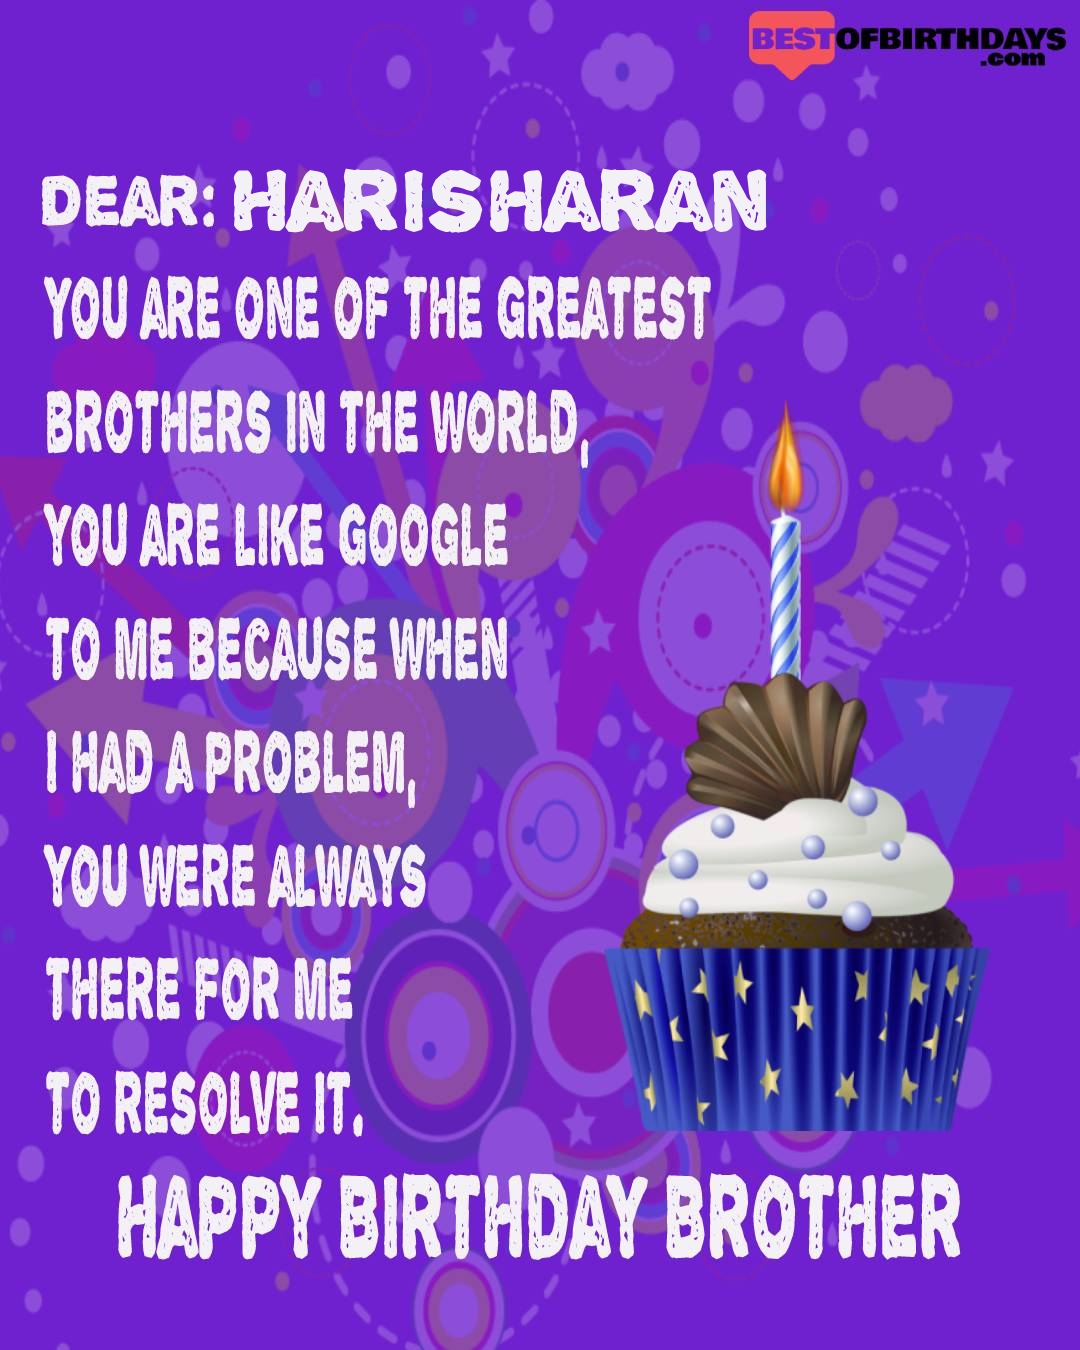 Happy birthday harisharan bhai brother bro